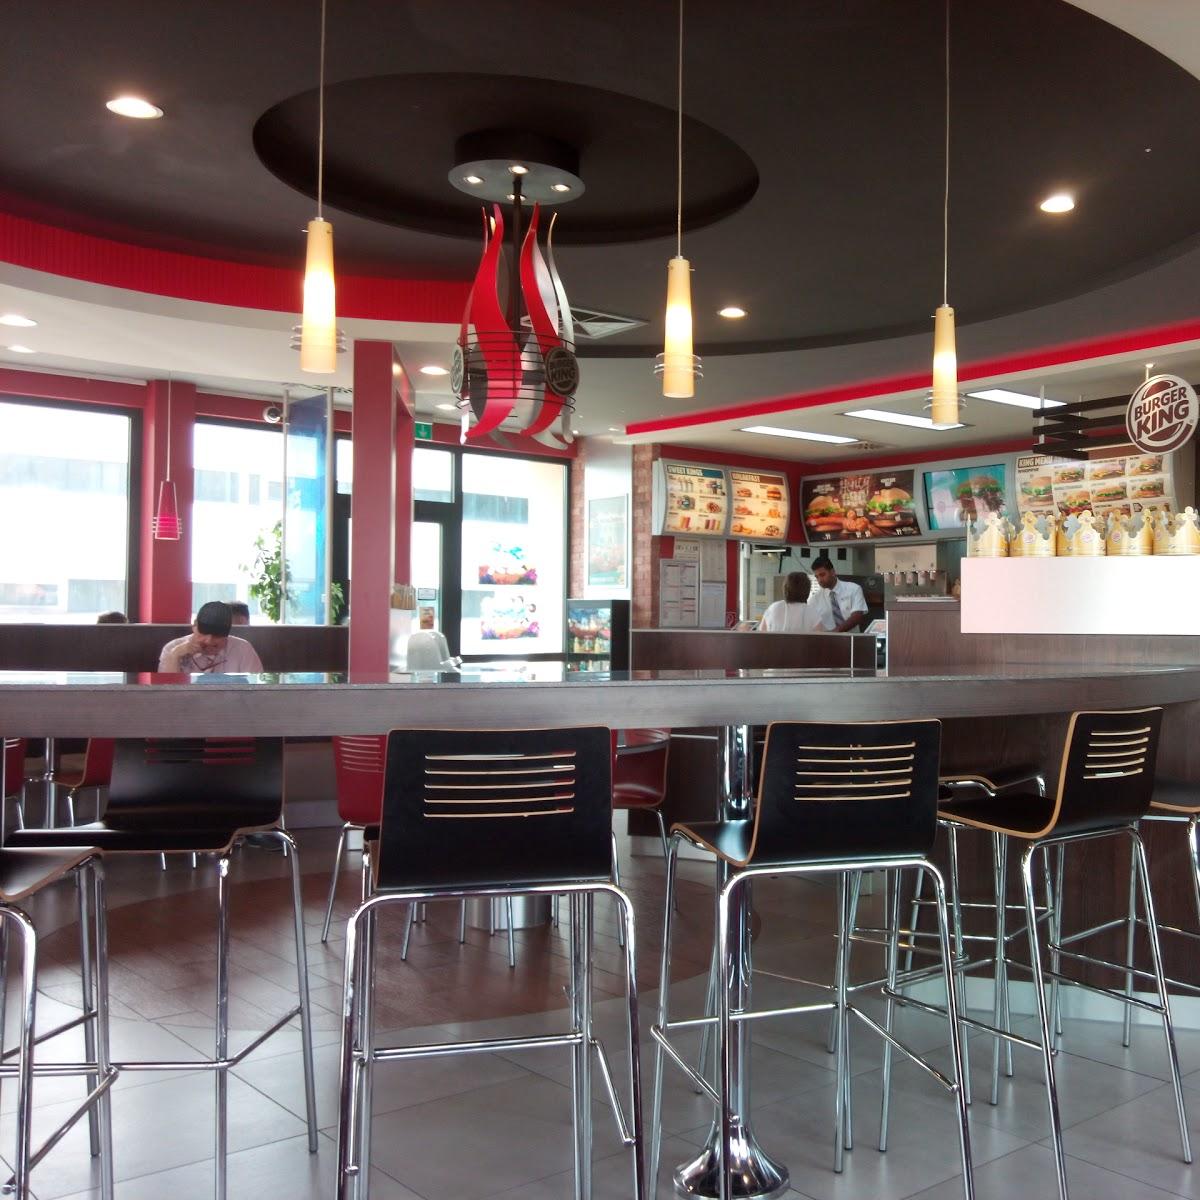 Restaurant "Burger King" in Mühldorf am Inn